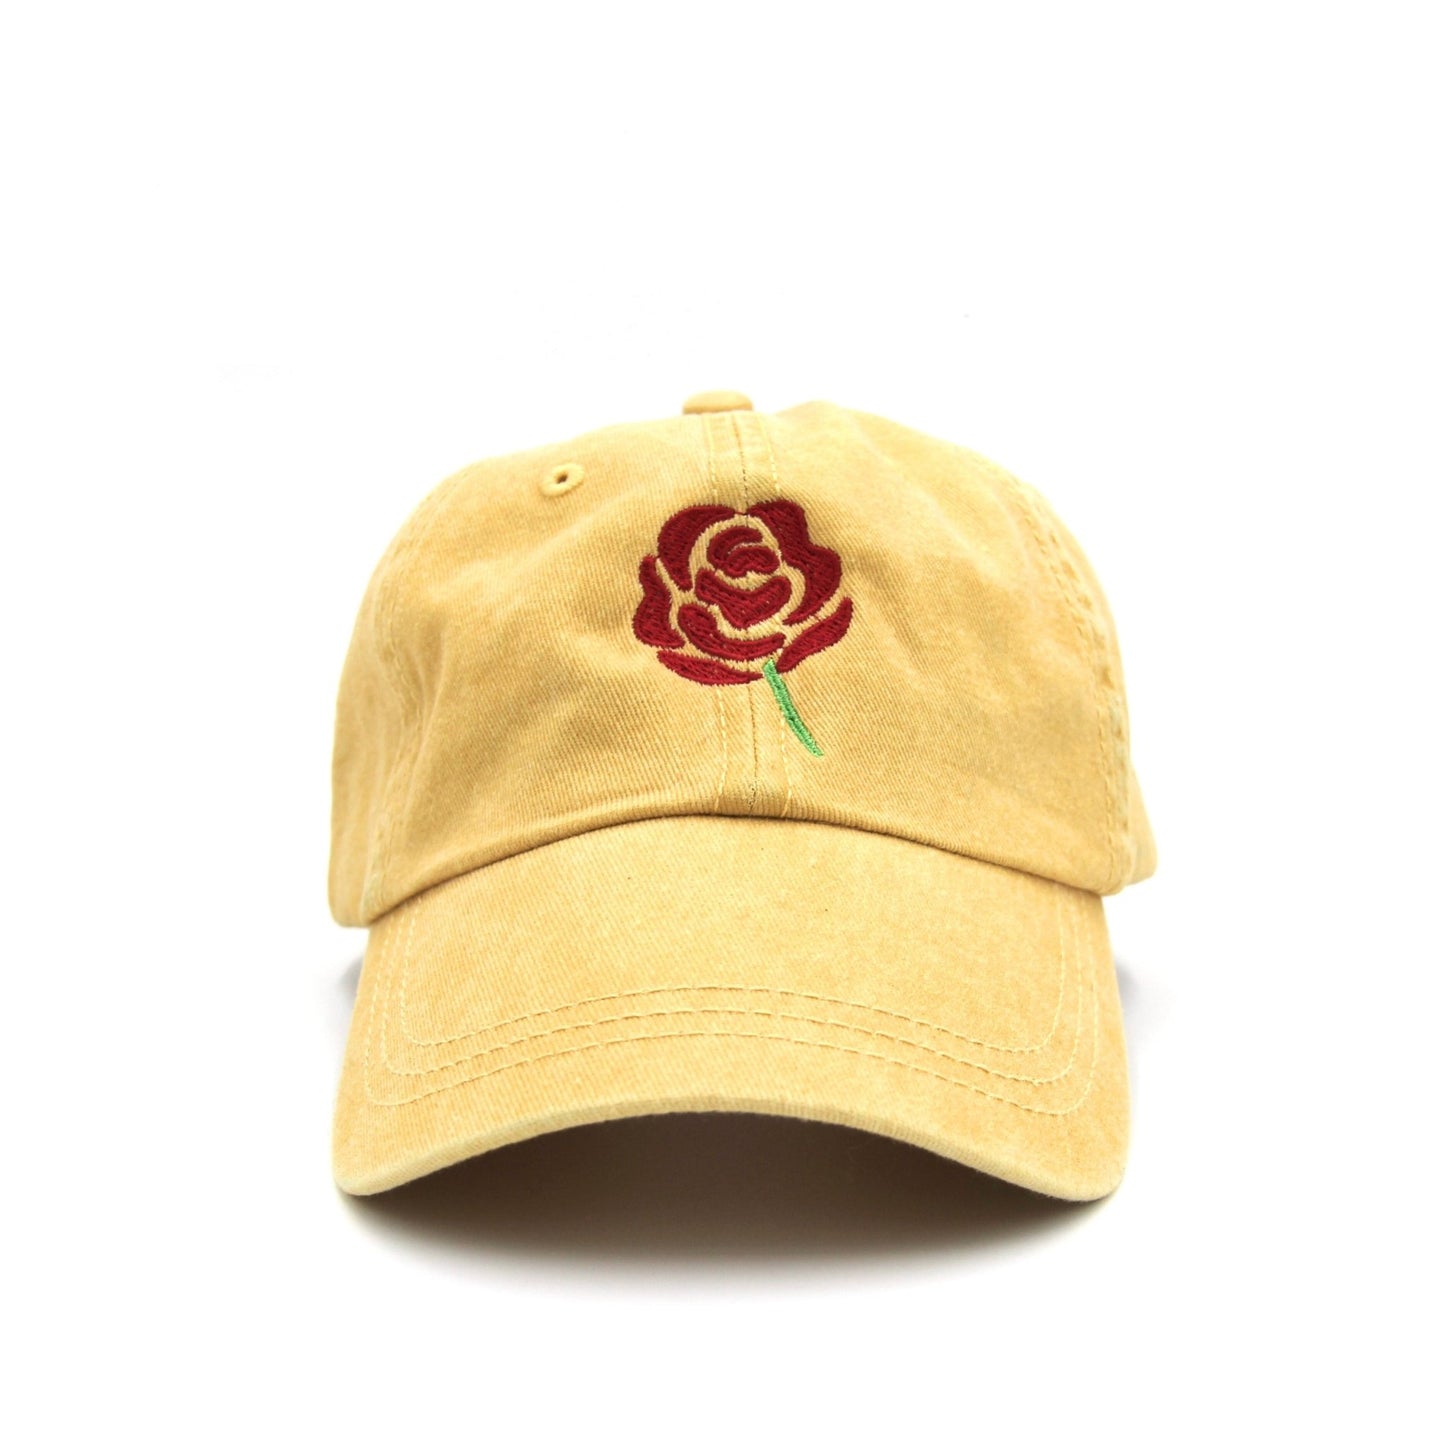 Rose Cap Wear The Peace Dad Caps